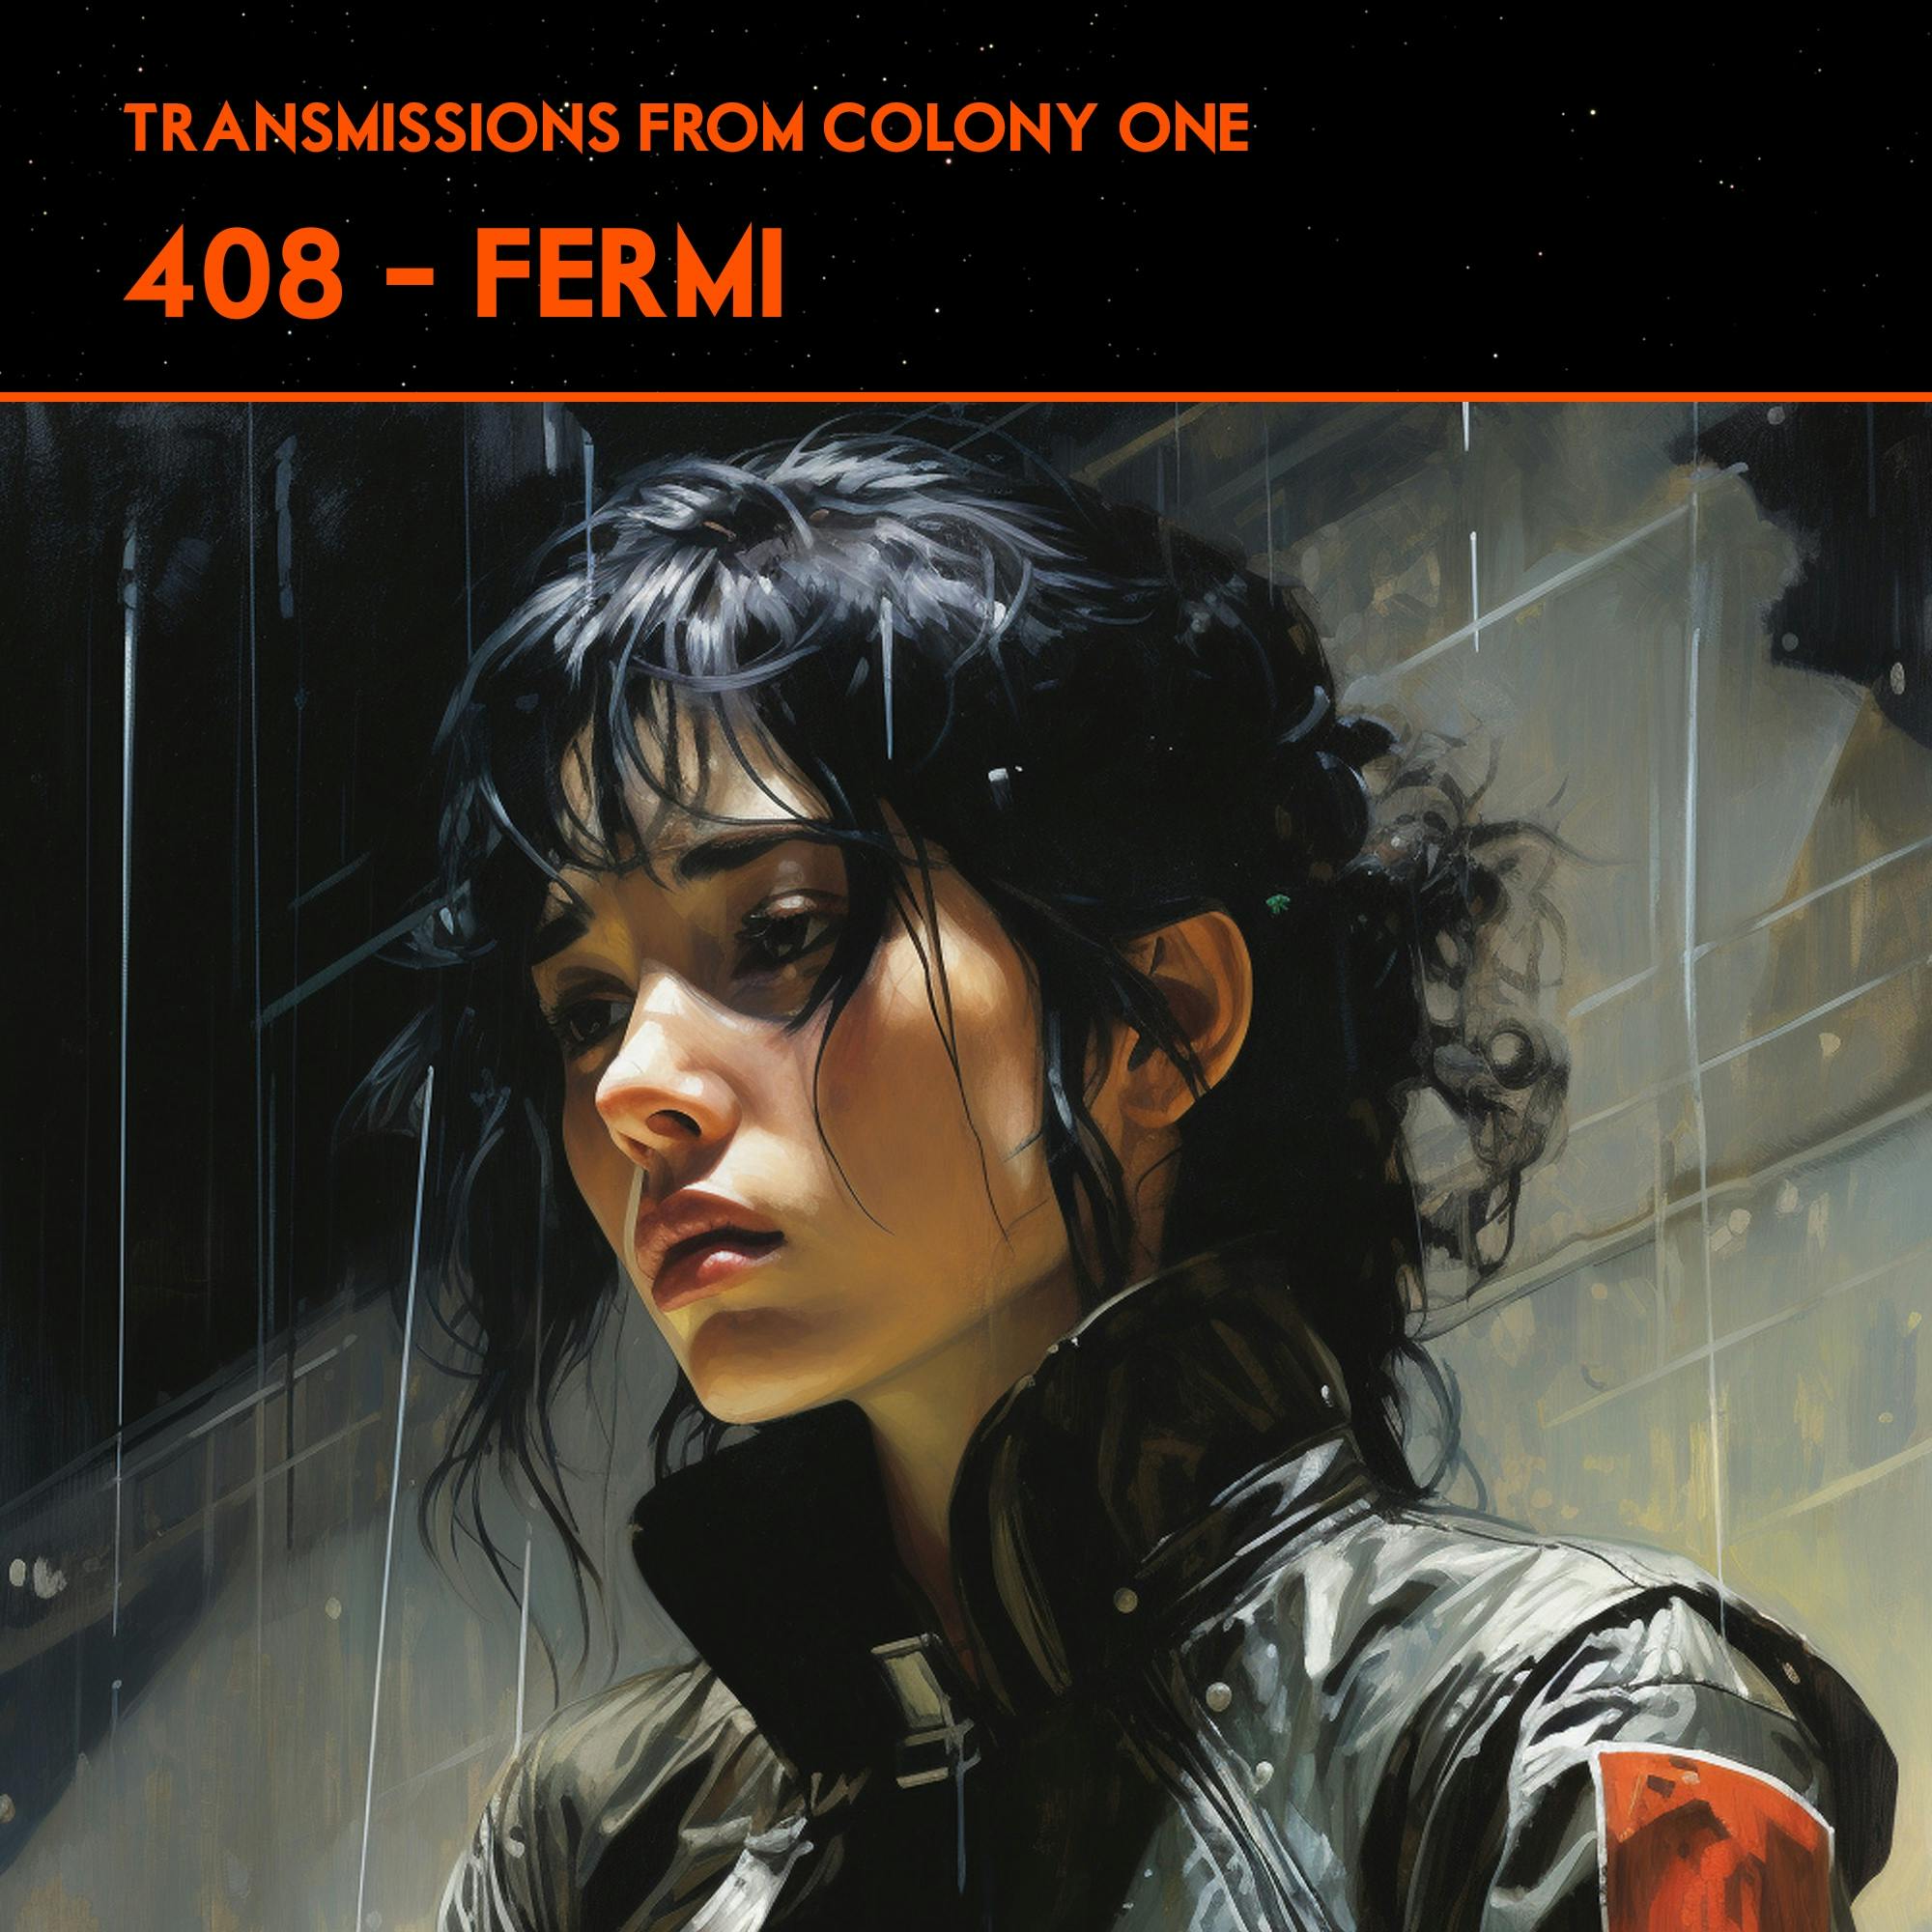 408 - Fermi